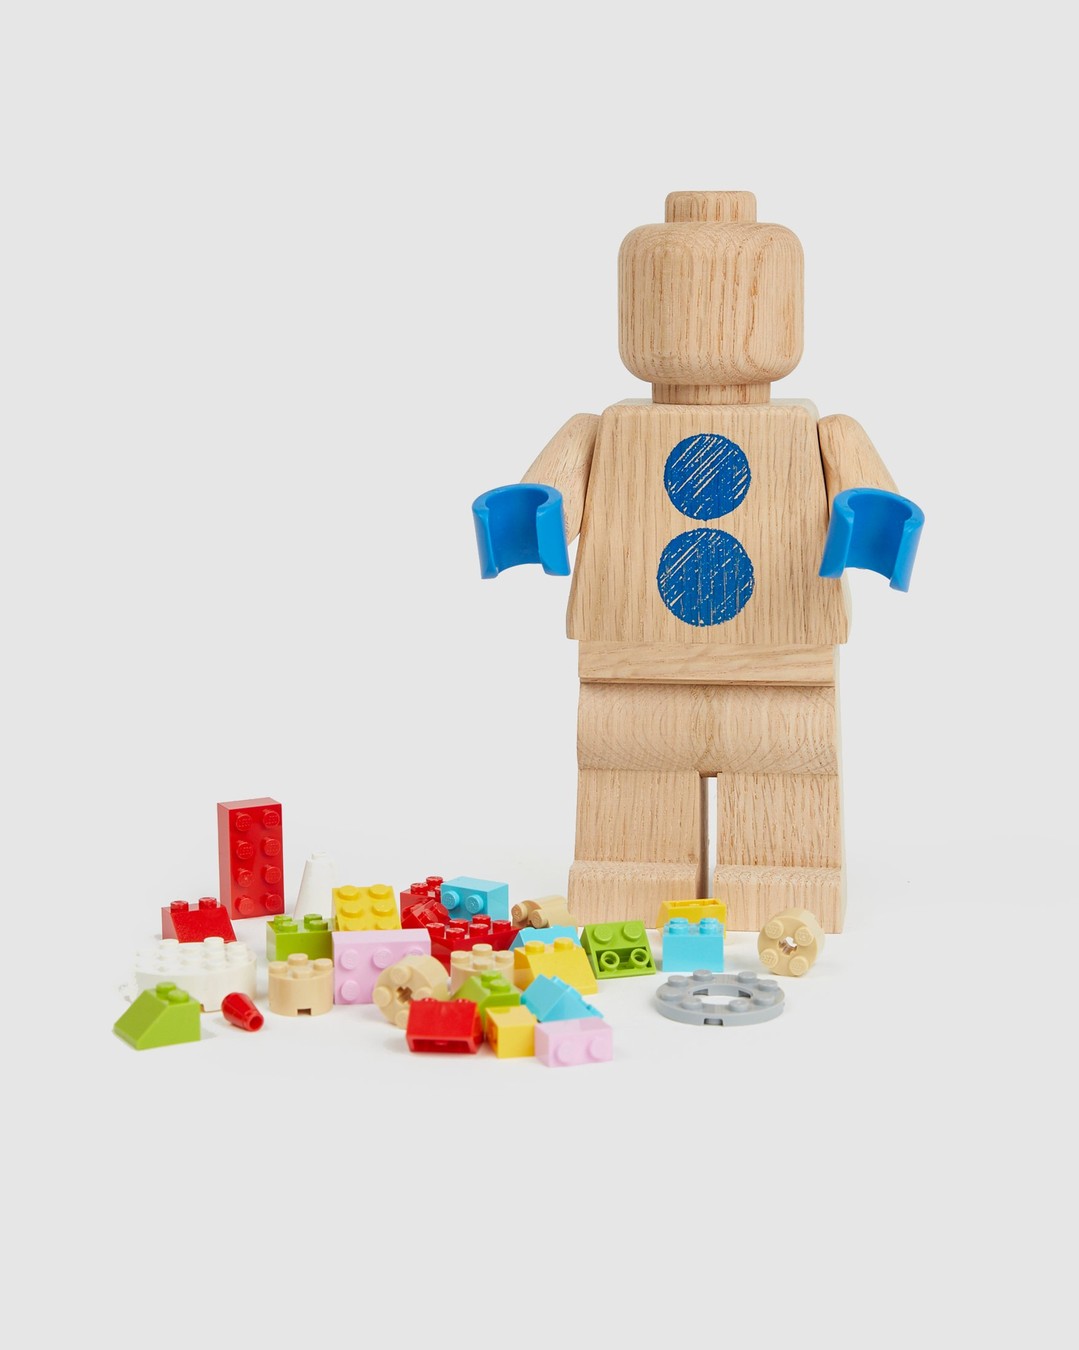 Colette Mon Amour x Lego – Wooden Minifigure - Arts & Collectibles - Brown - Image 4